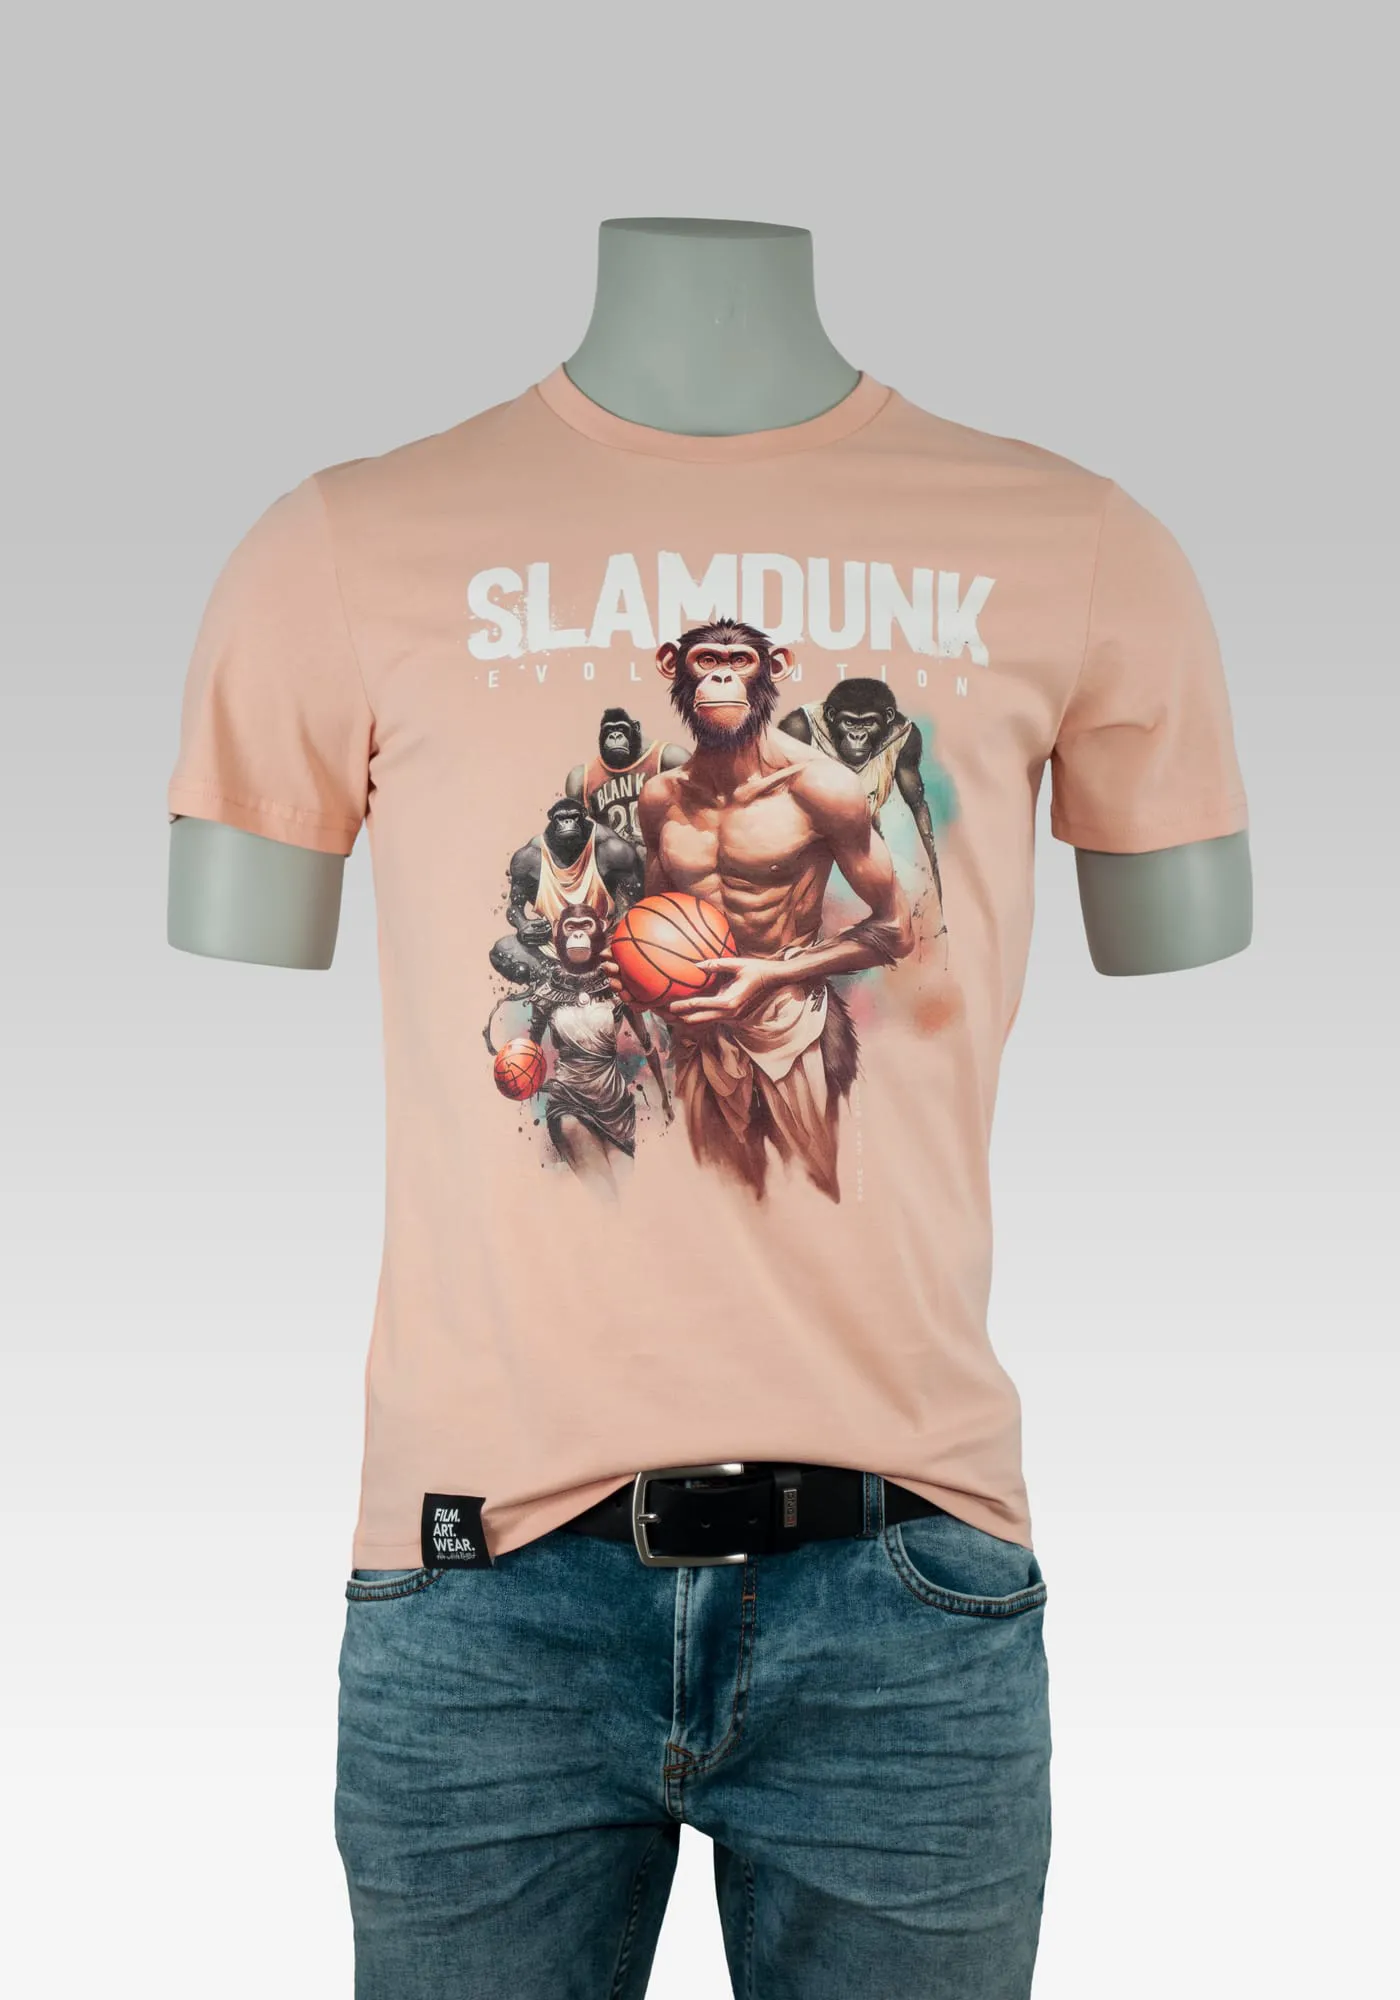 Slamdunk Evolution basketball T-Shirt in Farbe rose Frontansicht Hollowpuppe